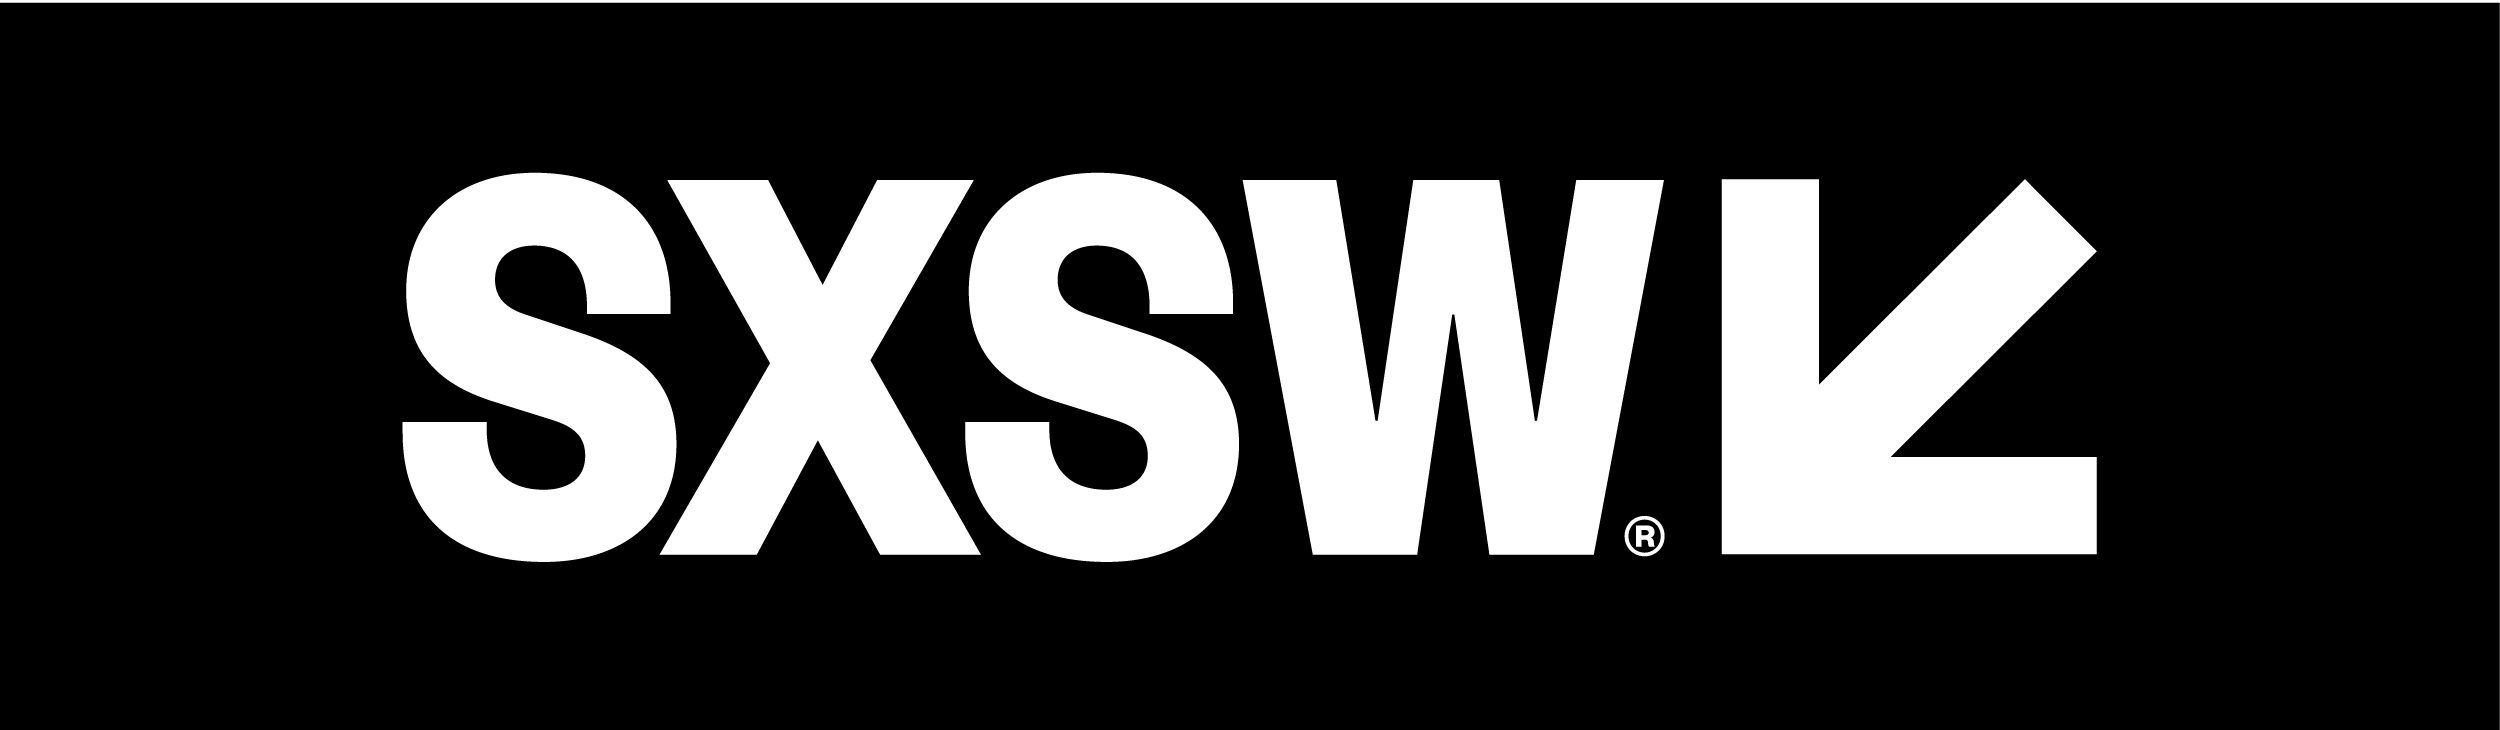 SXSW Music Festival - Full List of Showcasing Artists Announced